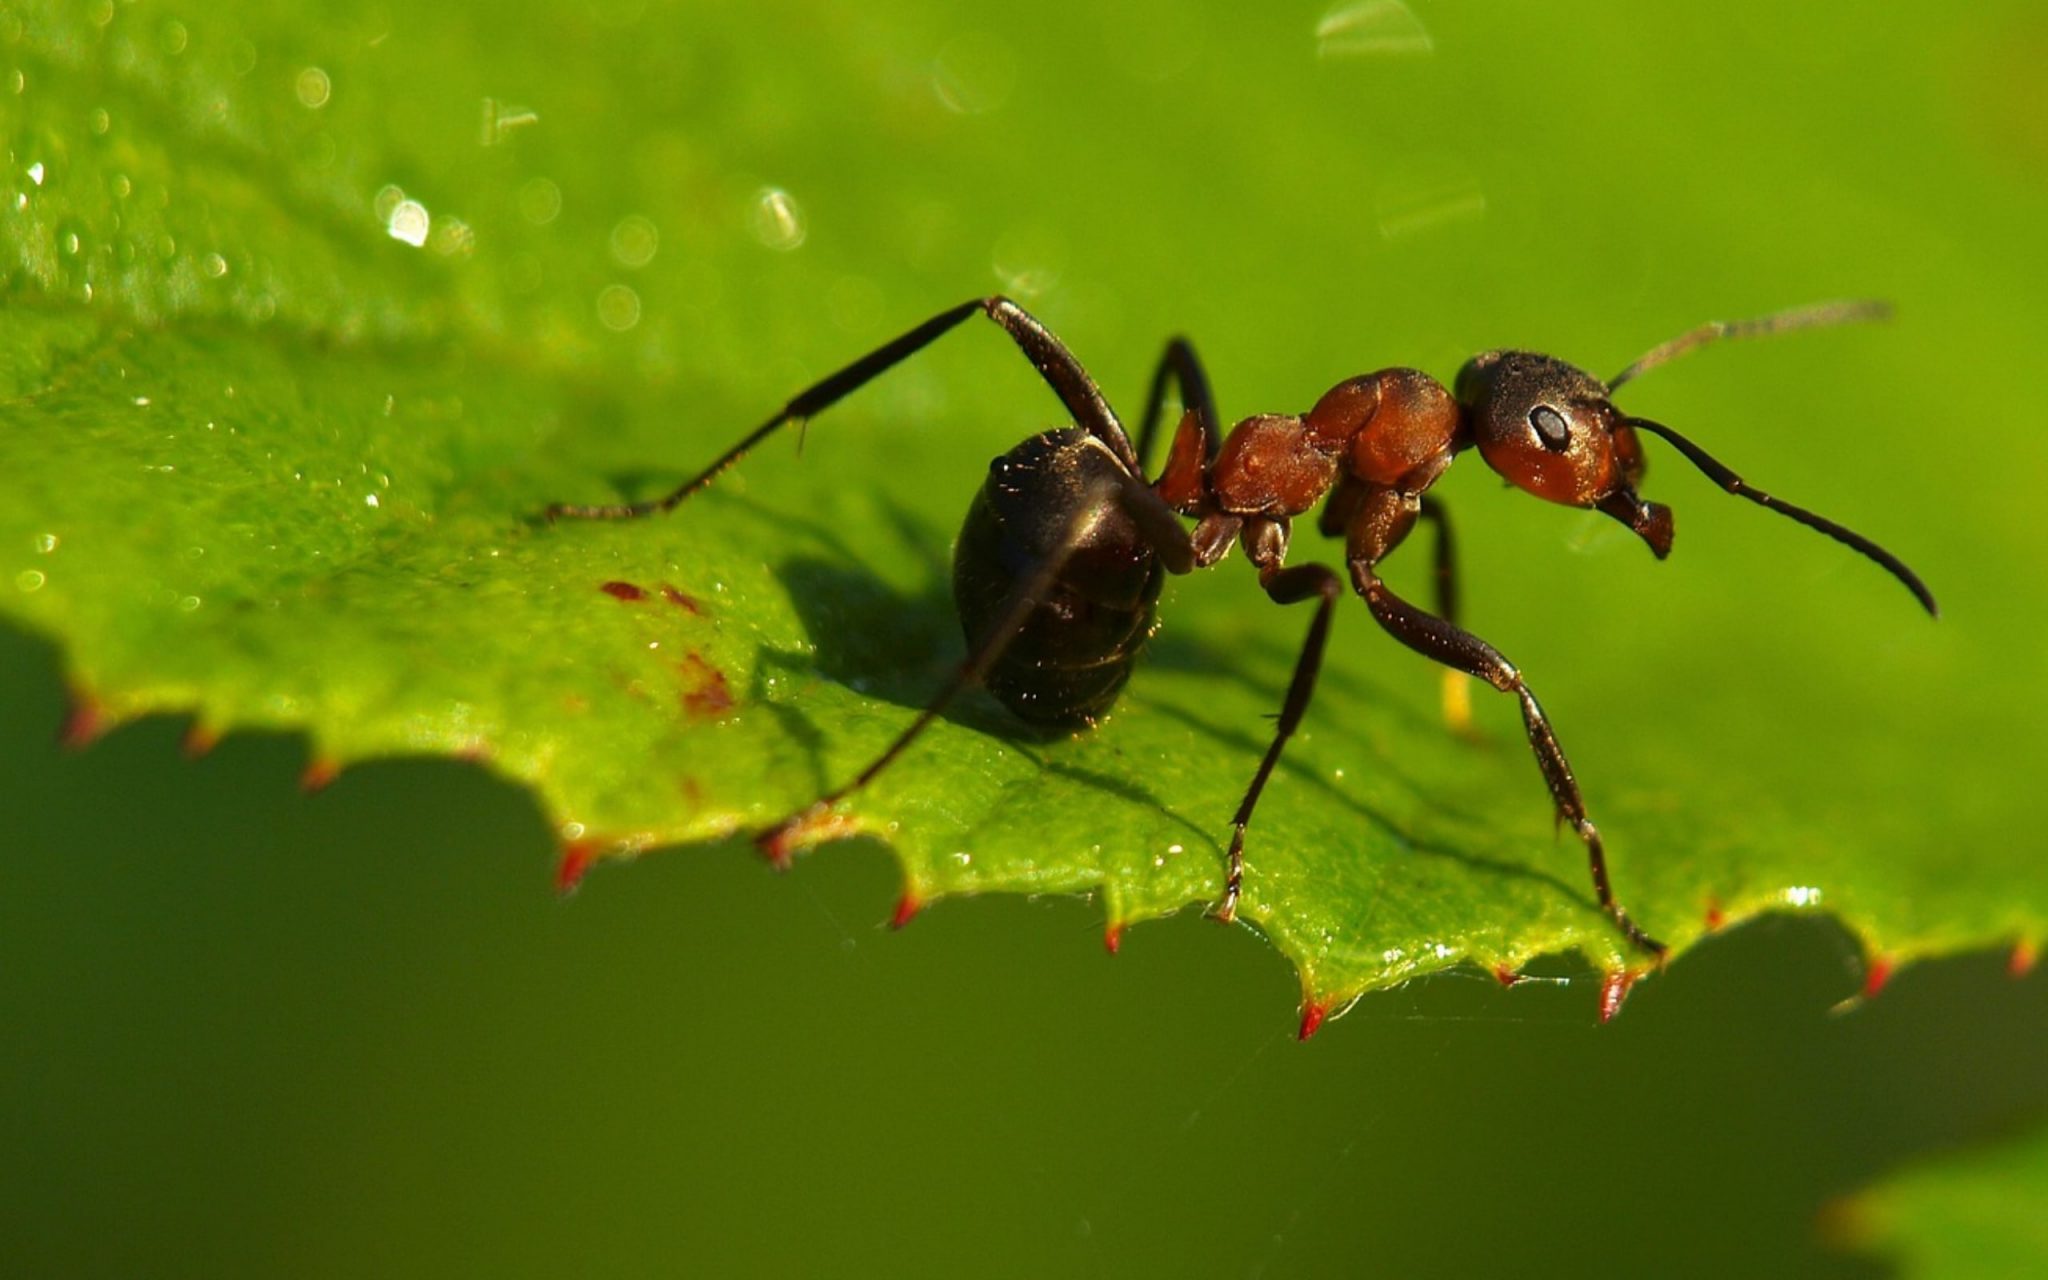 Скорость муравья м мин. Муравей. Планет муравьи. Муравей техника.